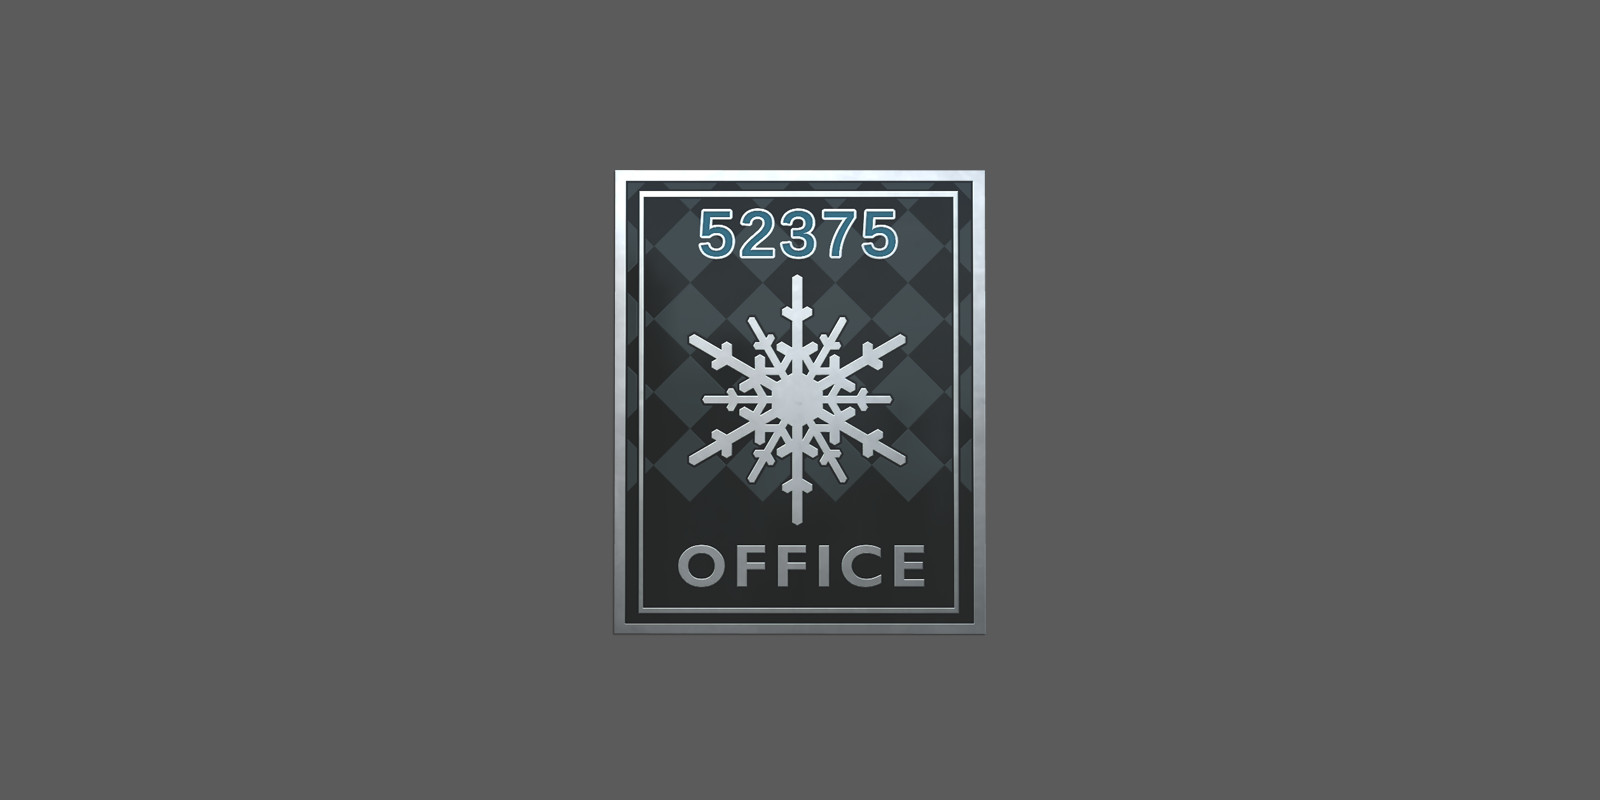 CS:GO - Series 2 - Office Collectible Pin